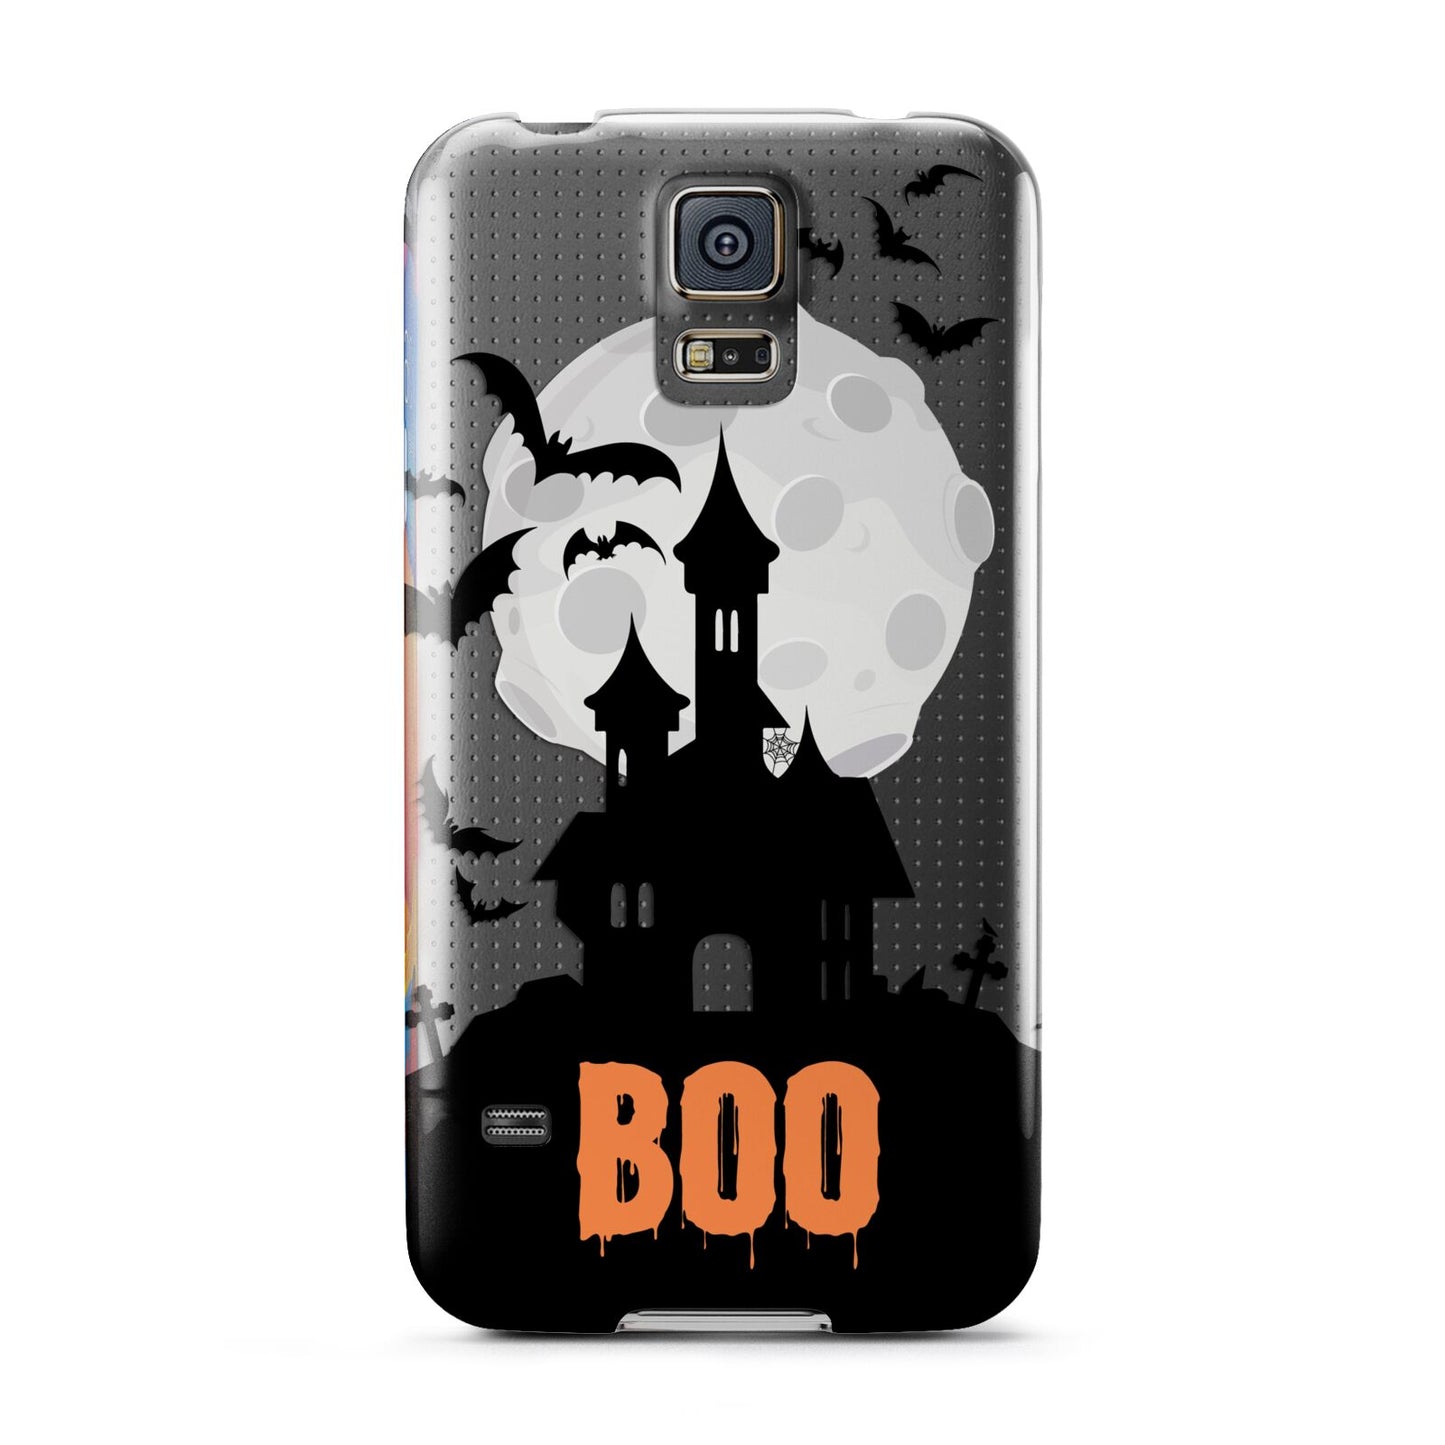 Boo Gothic Black Halloween Samsung Galaxy S5 Case